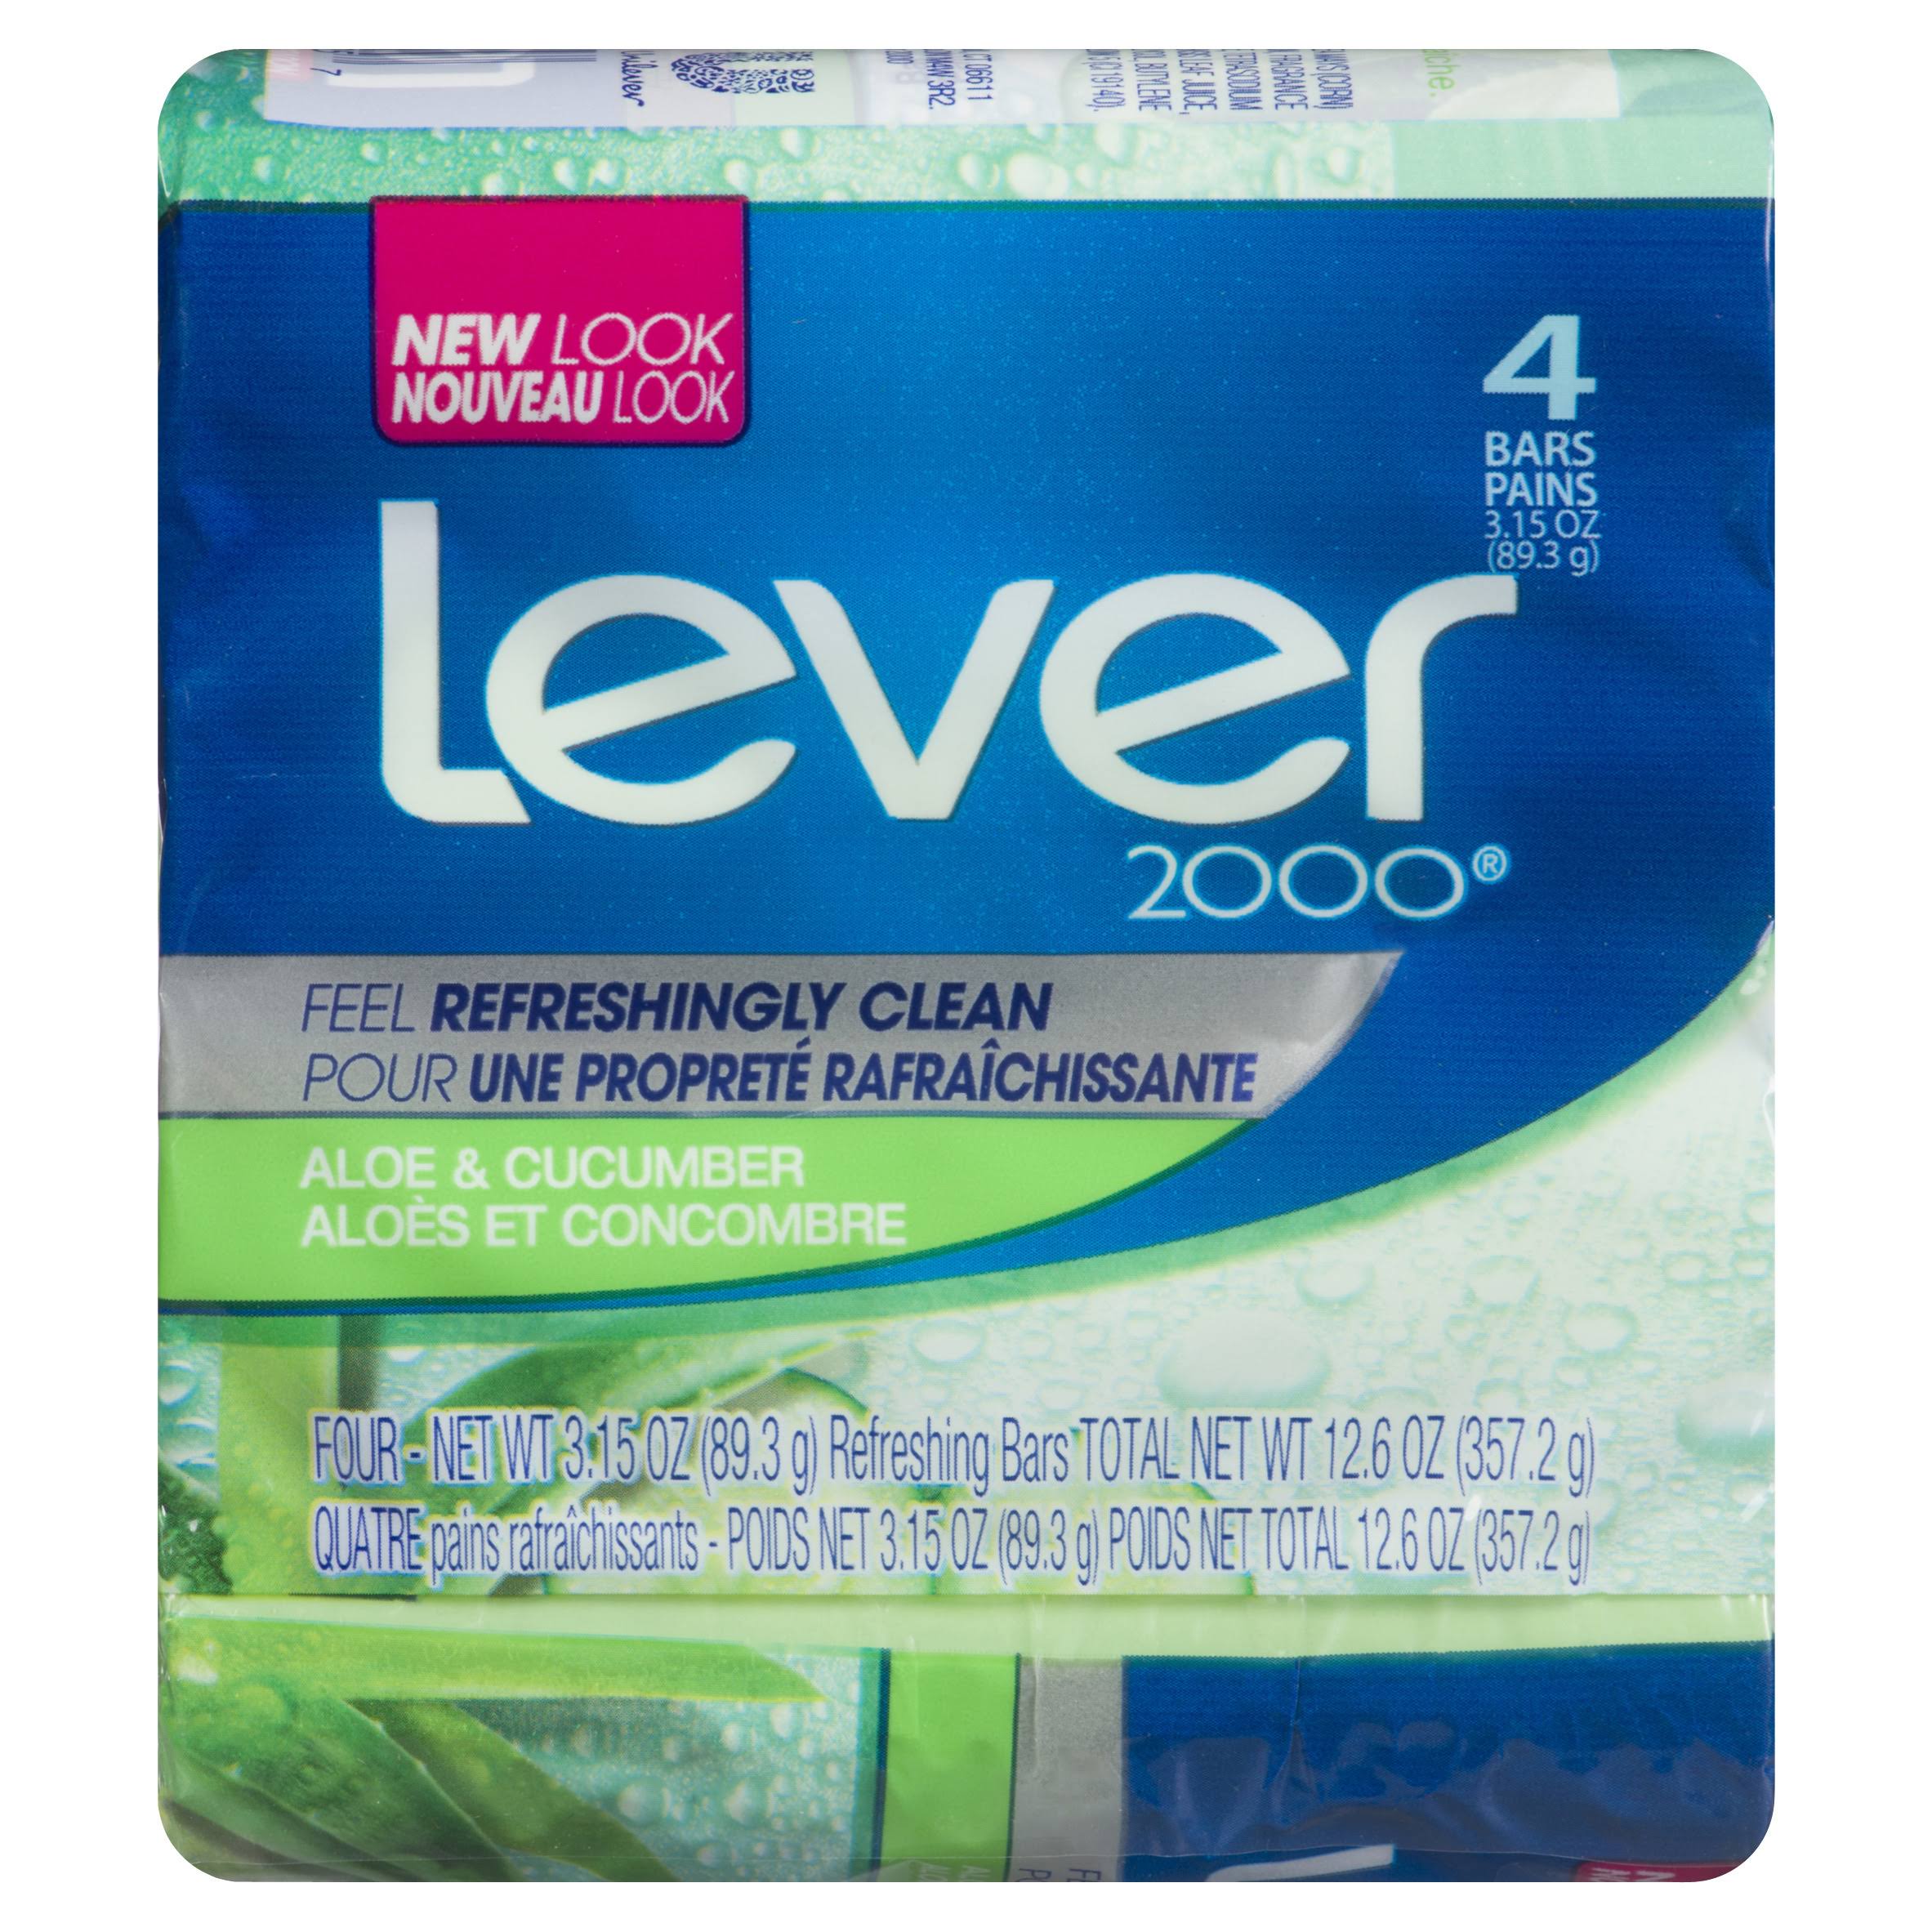 Lever 2000 Bar Soap - Aloe & Cucumber, 3.15oz, 4ct